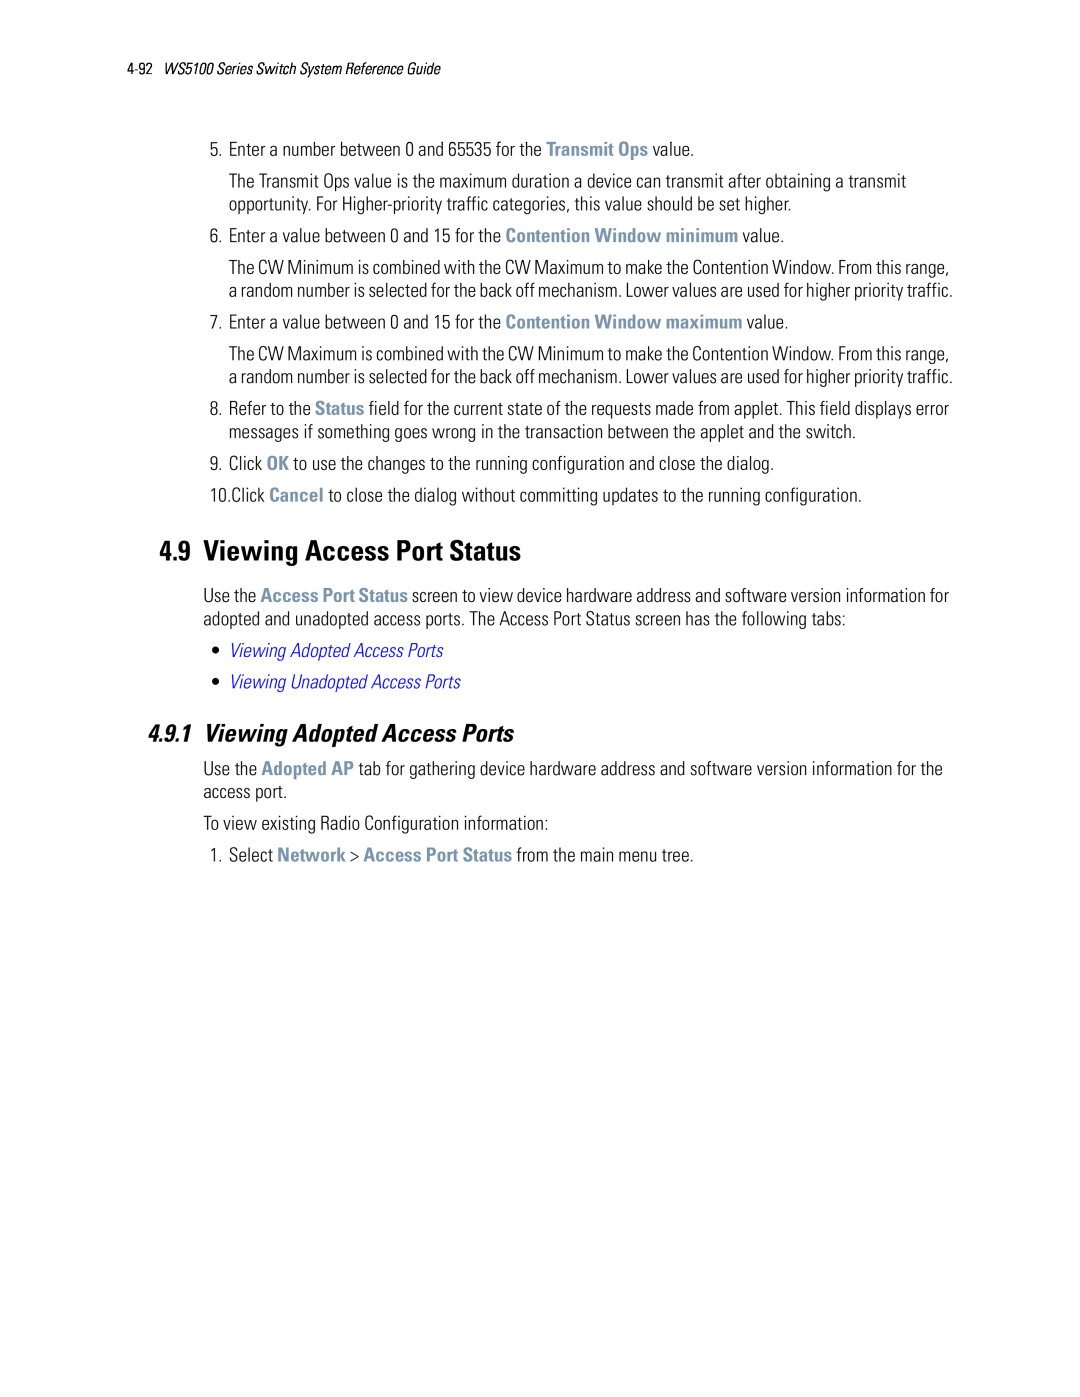 Motorola WS5100 manual Viewing Access Port Status, 4.9.1Viewing Adopted Access Ports, •Viewing Adopted Access Ports 